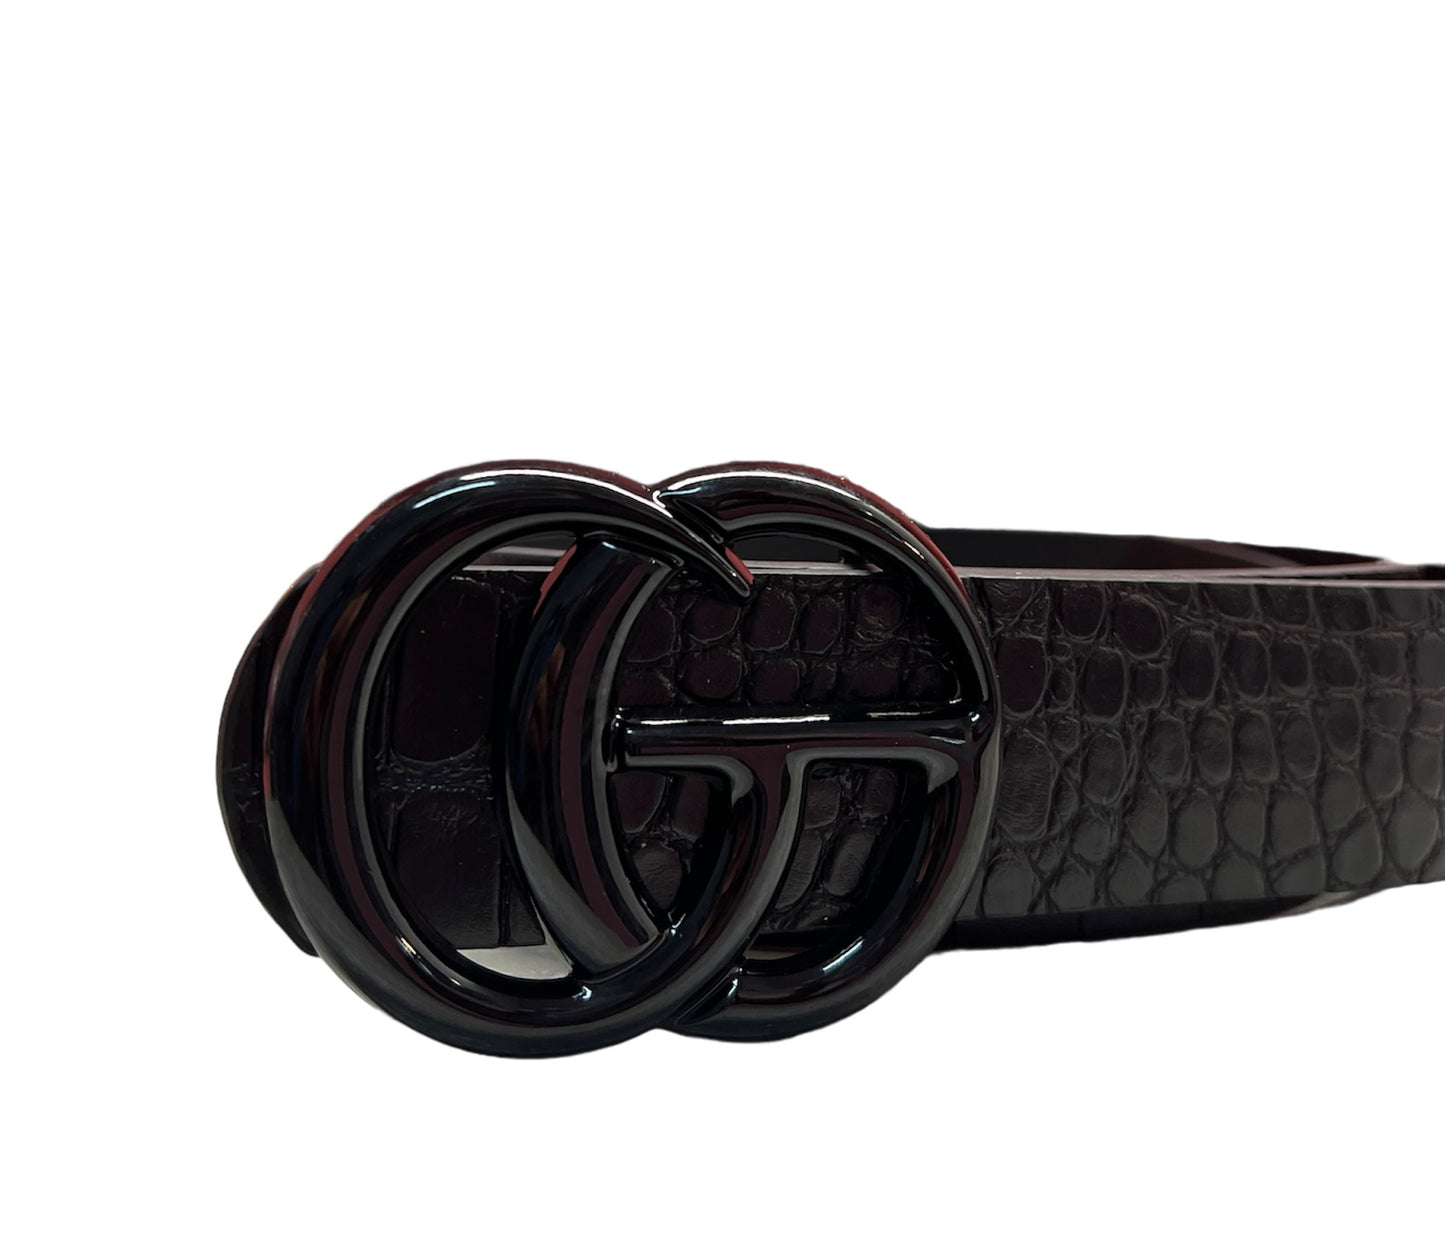 GG Enamel Belt Buckle (in Black, Taupe, and Cognac)